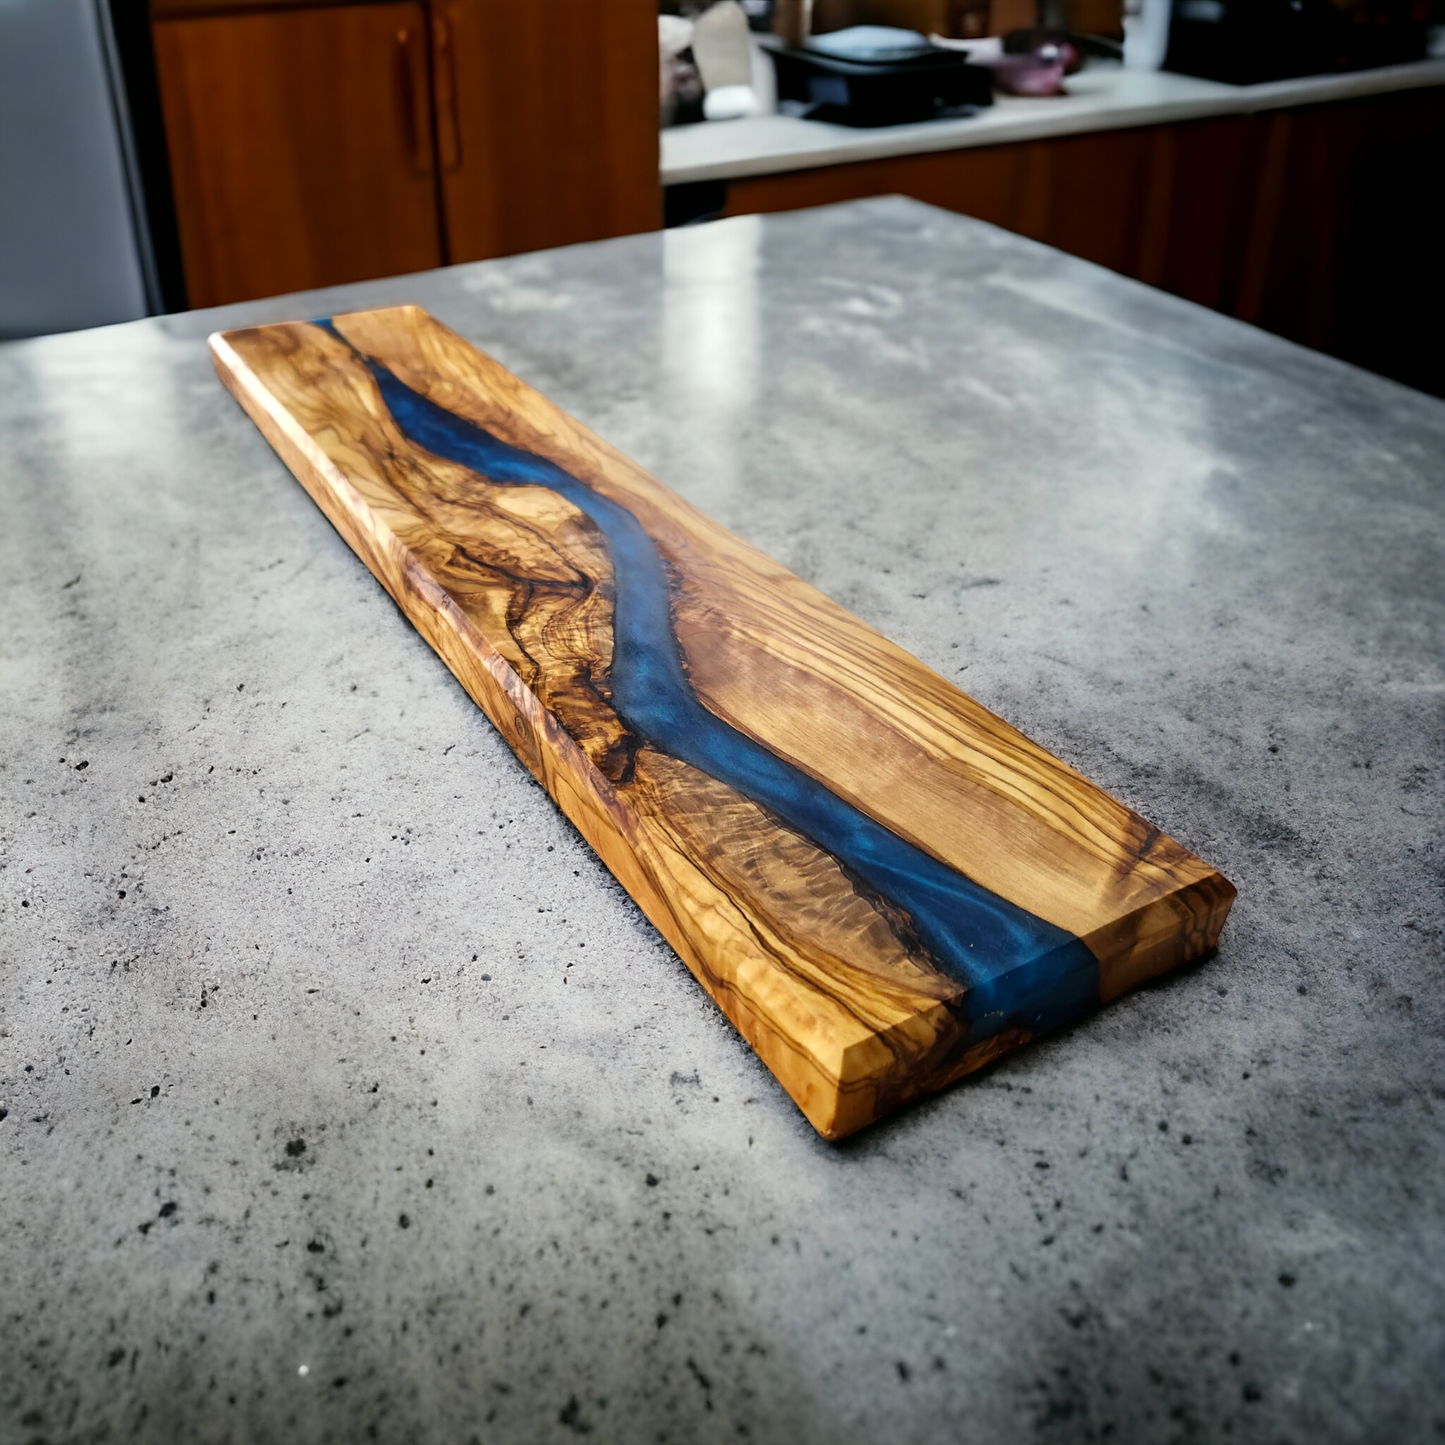 Olive Wood and Resin magnetic knife holder